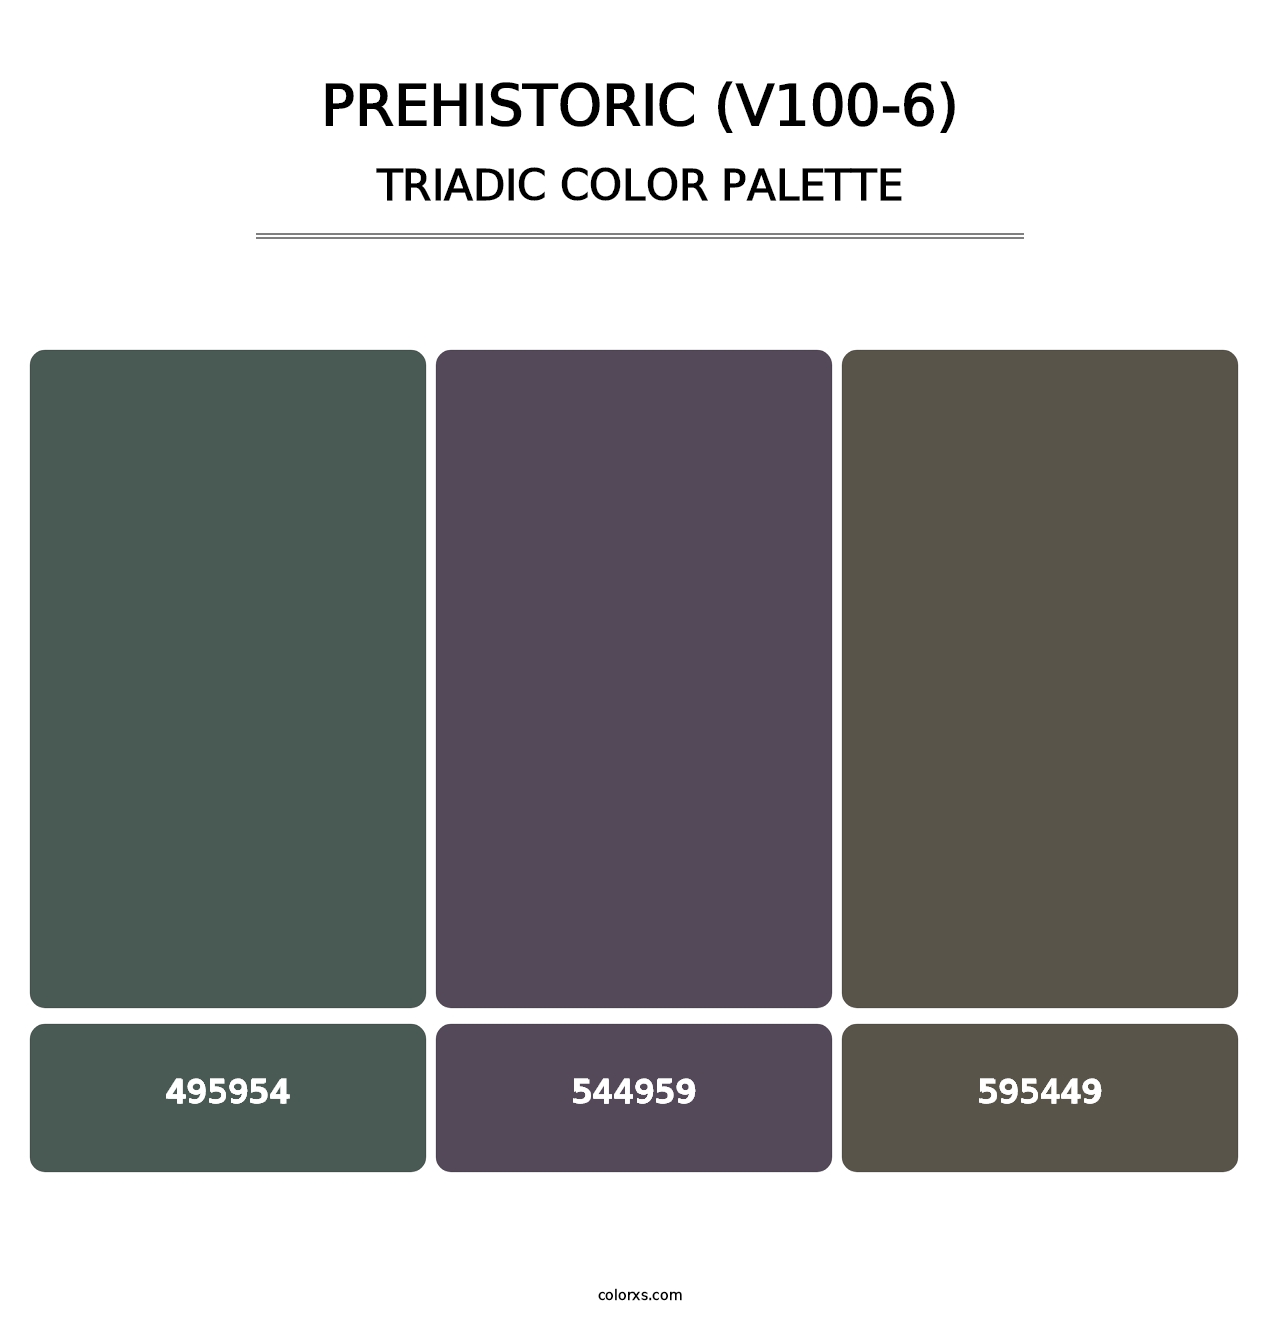 Prehistoric (V100-6) - Triadic Color Palette